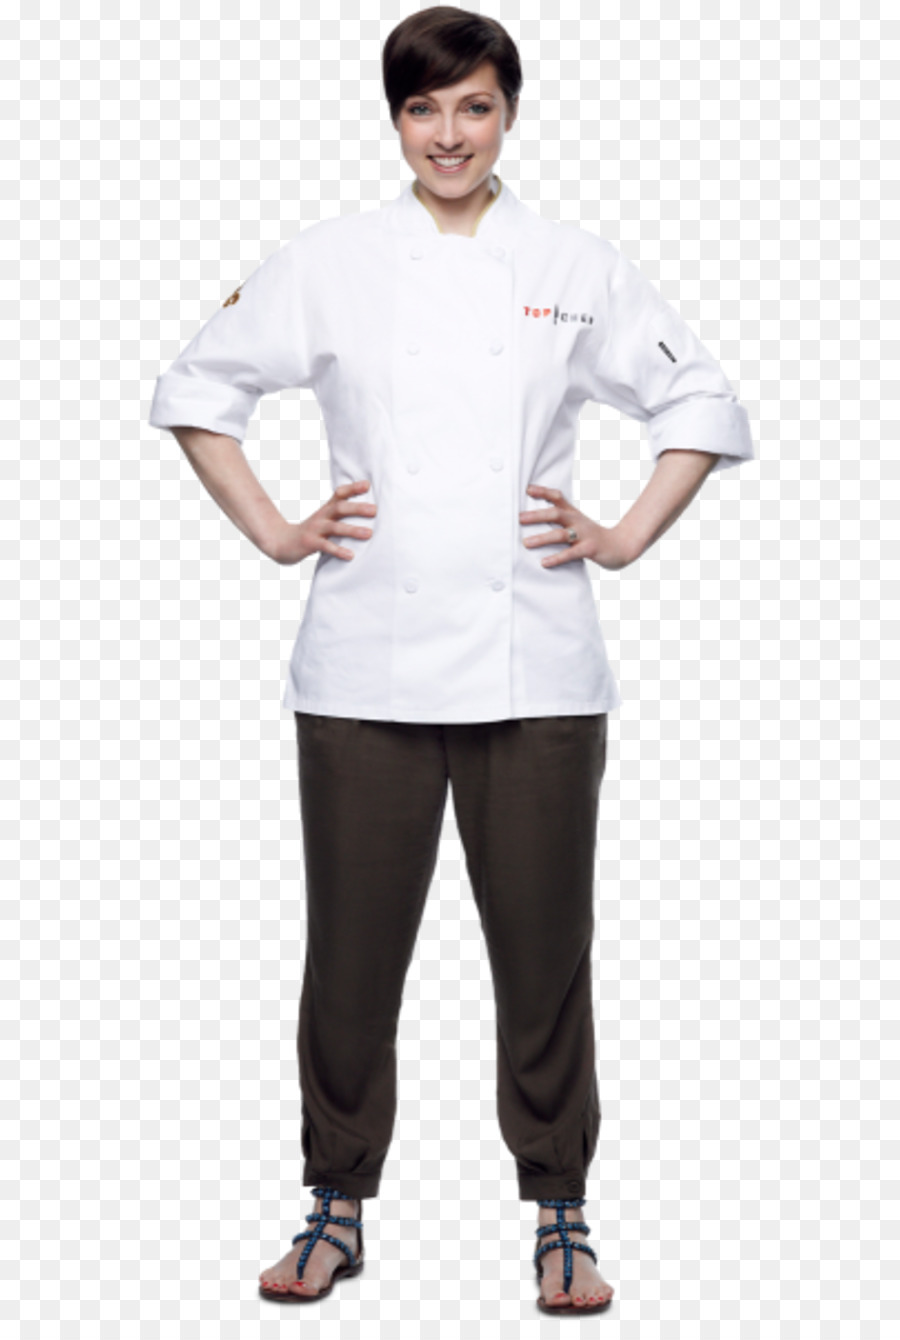 Top Chef - Season 11 Gail Simmons, Chef ' s uniform - anwarchef